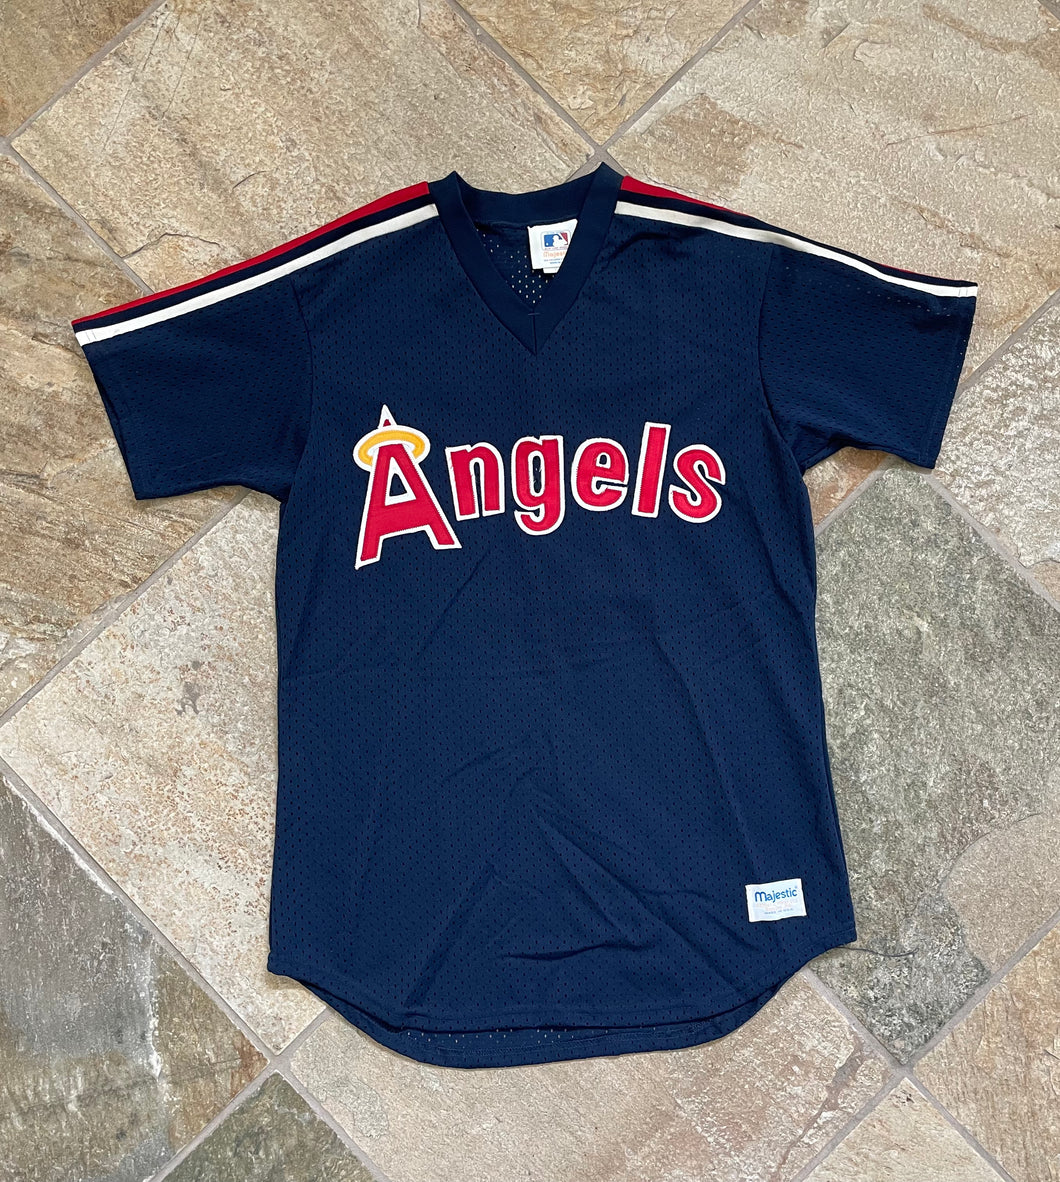 Vintage California Angels Majestic Baseball Jersey, Size Large